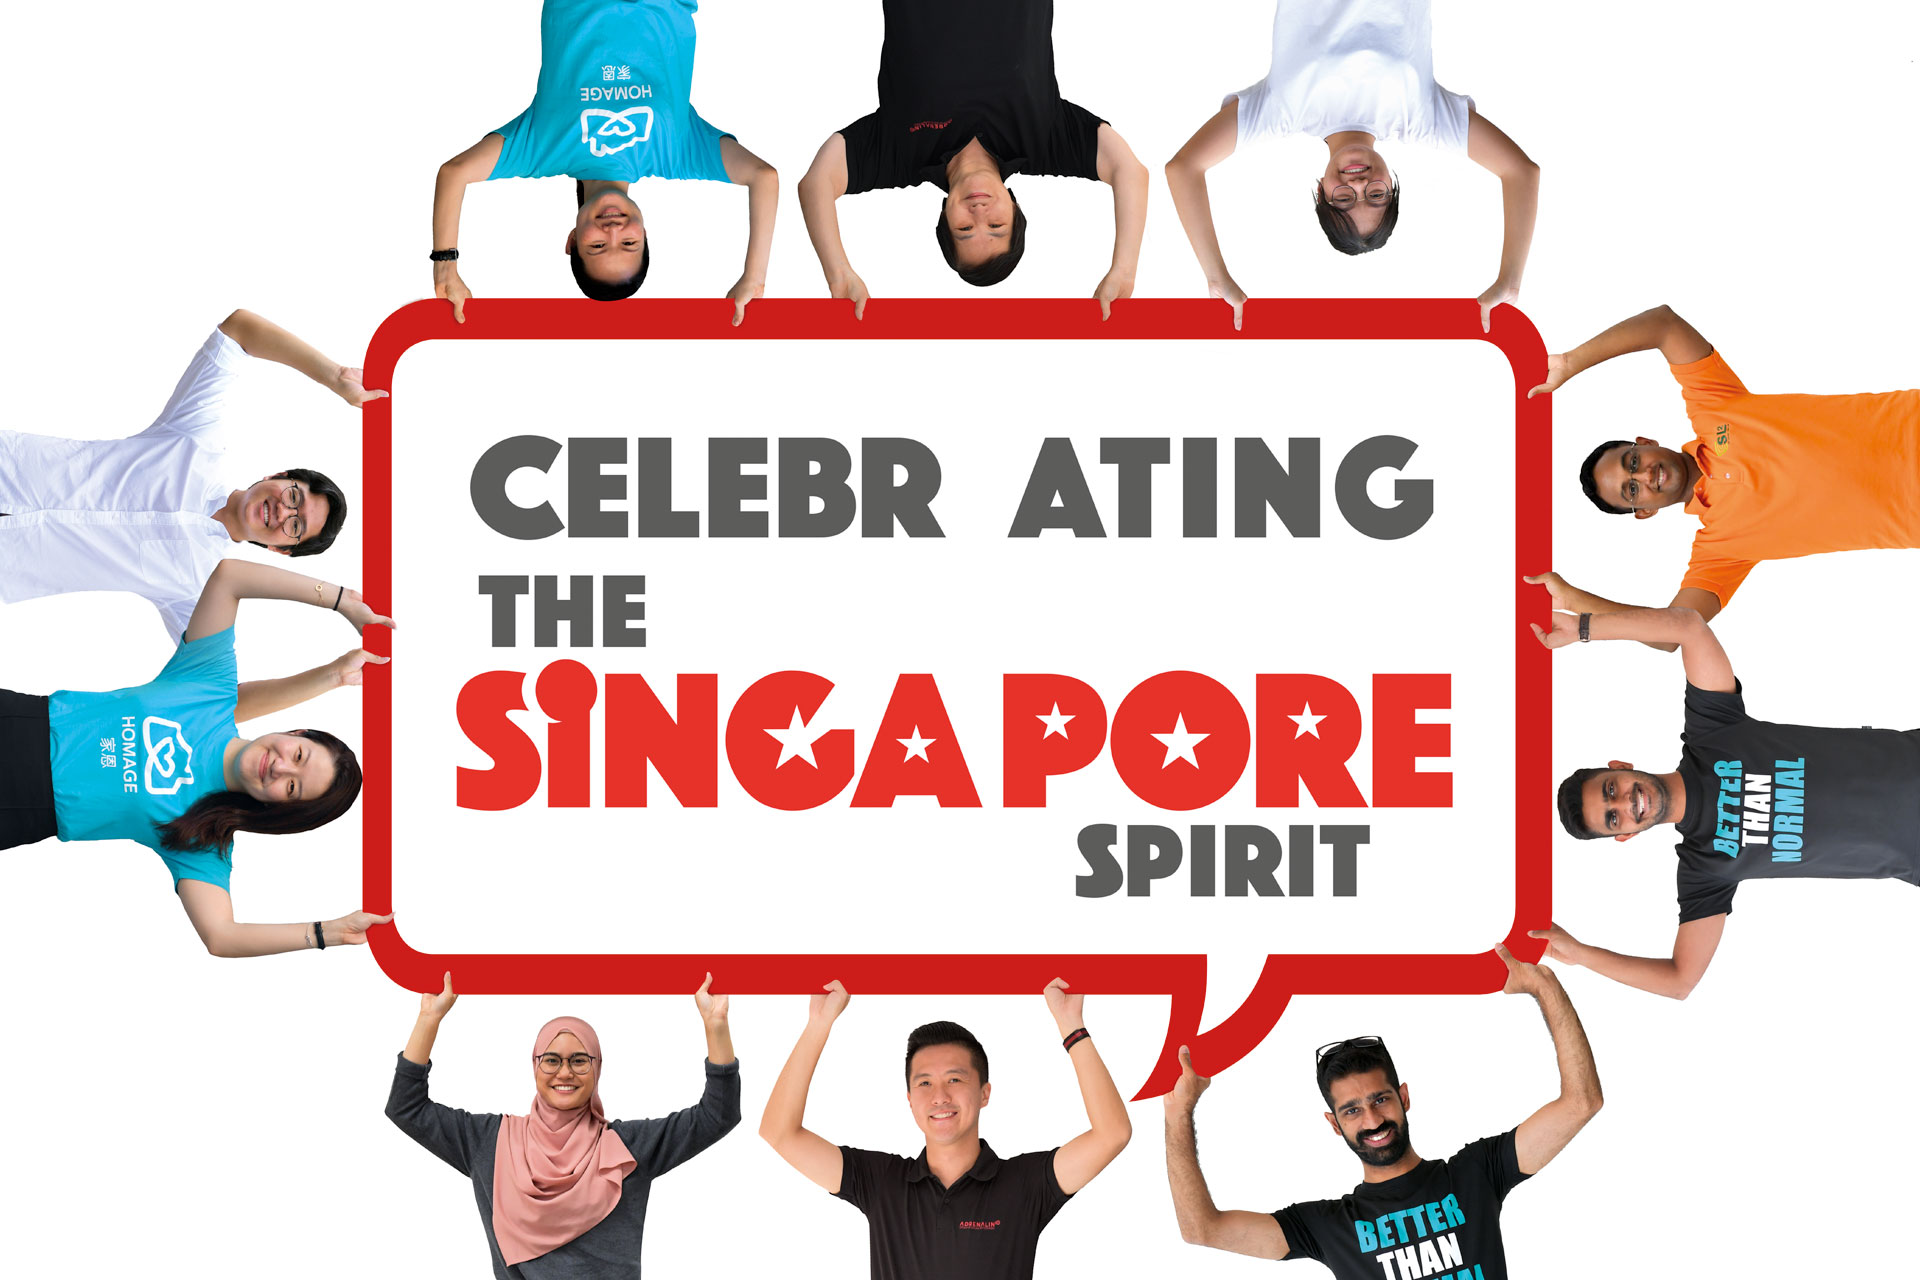 Celebrating the Singapore Spirit